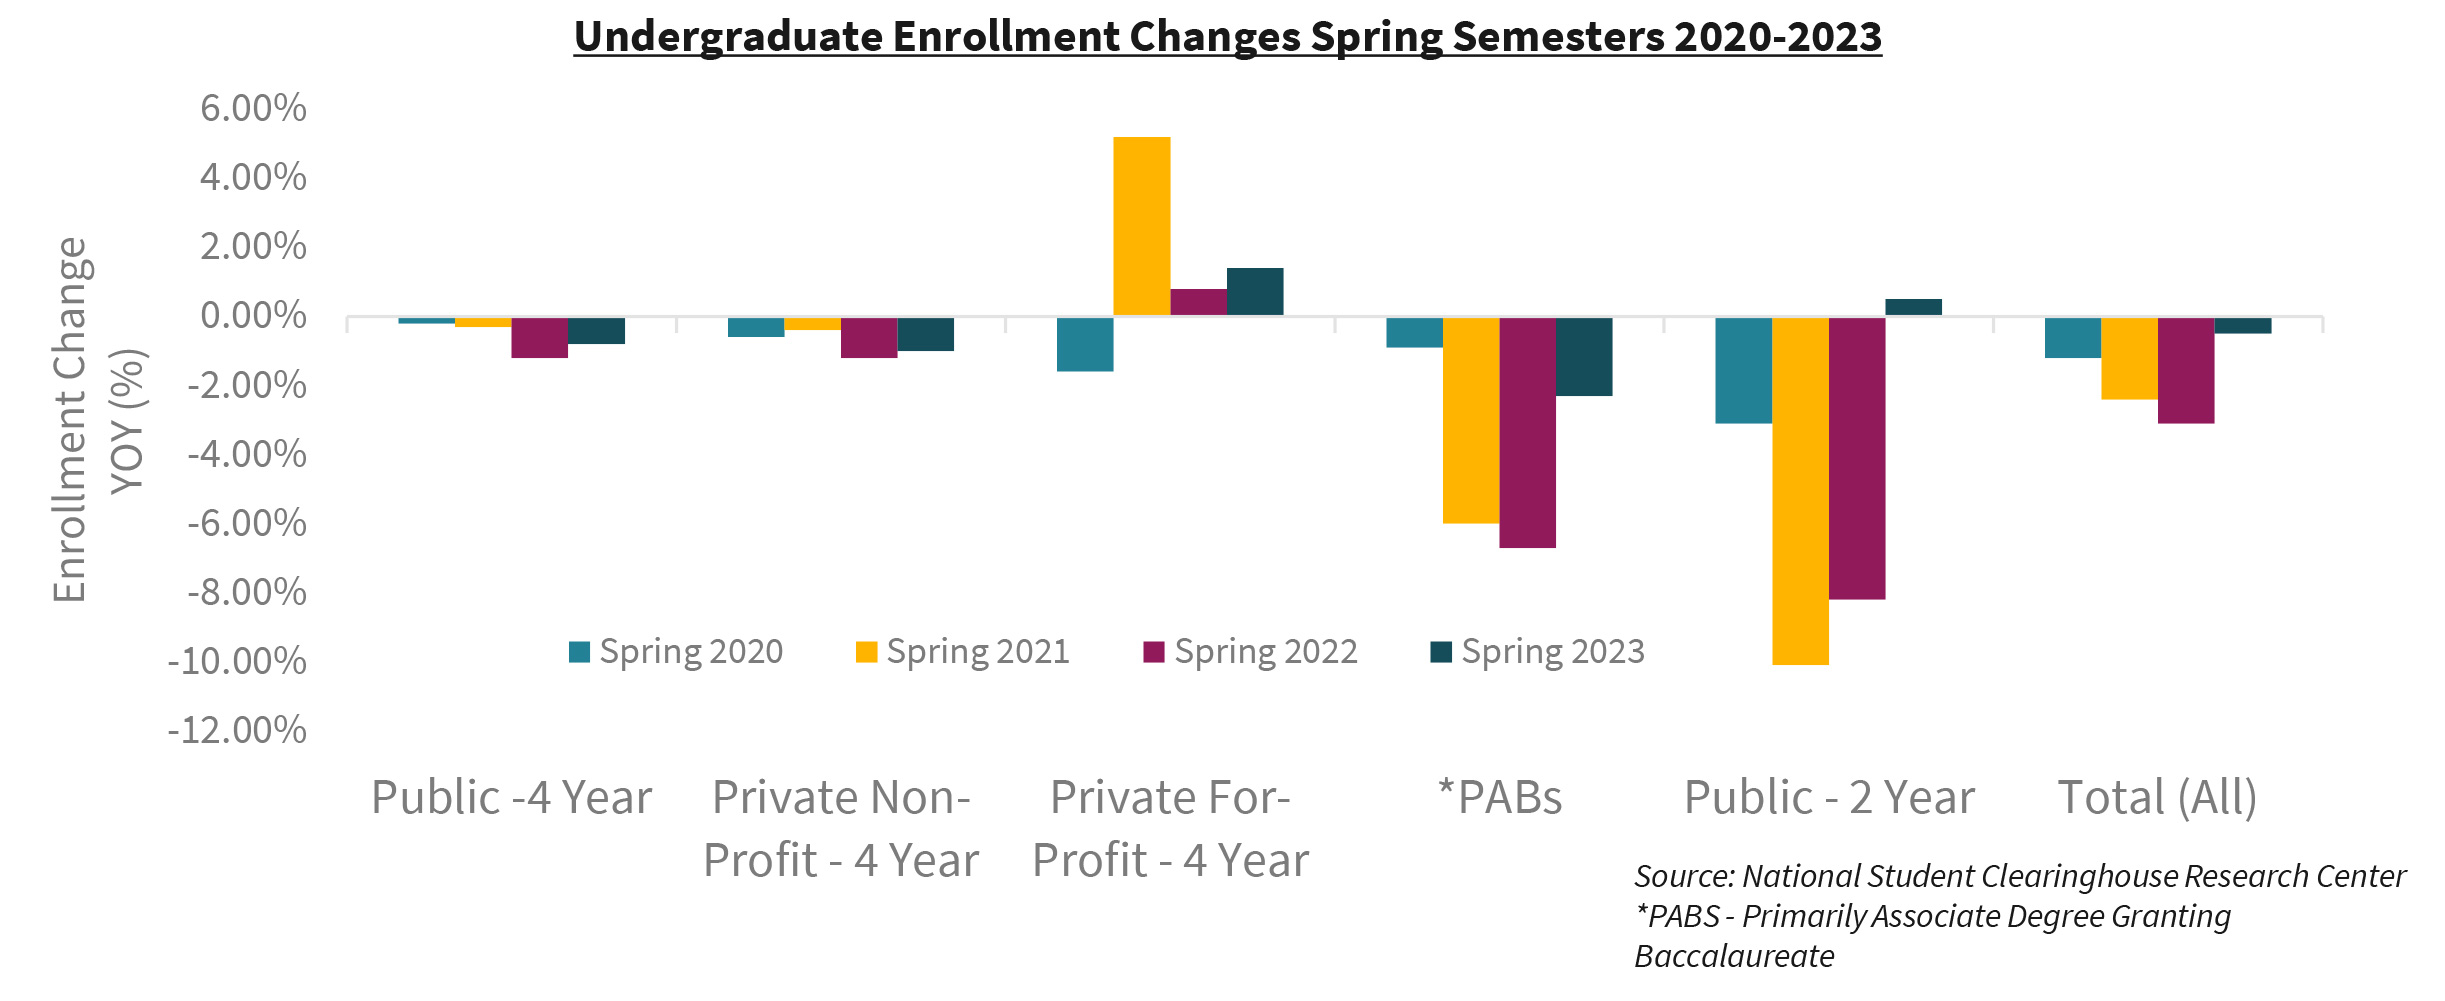 Undergraduate Enrollment Changes Spring Semesters 2020-2023